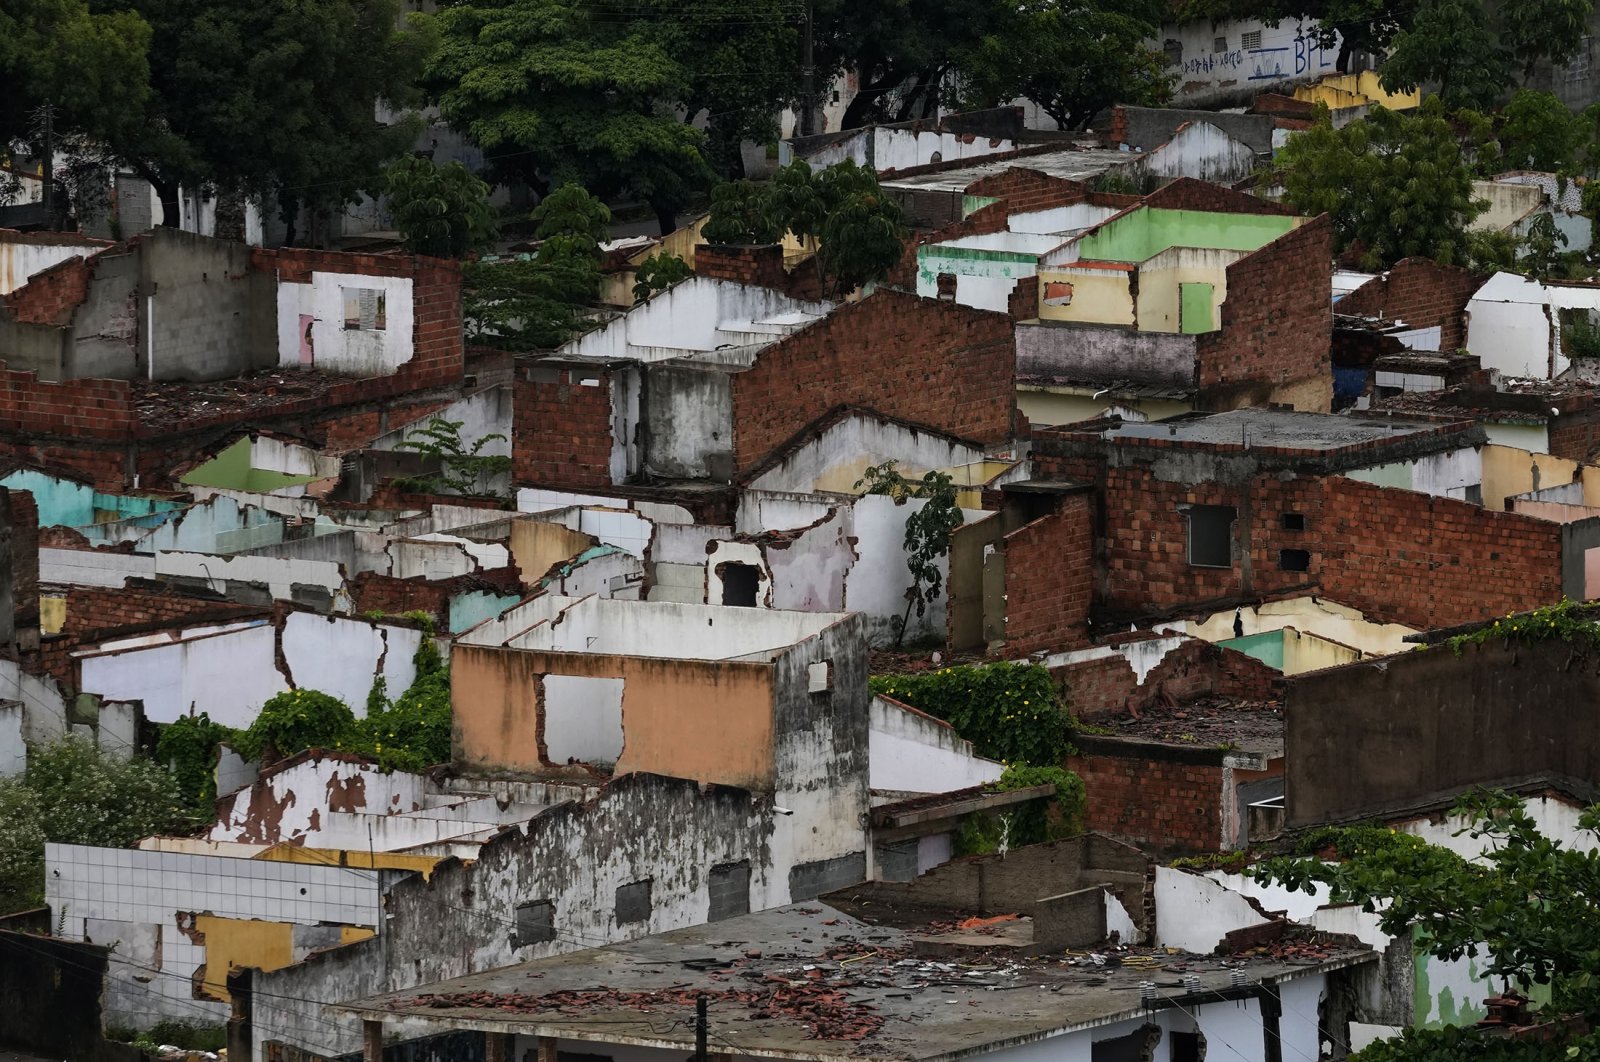 Kota hantu: 55.000 melarikan diri dari lingkungan Brasil karena penambangan perkotaan